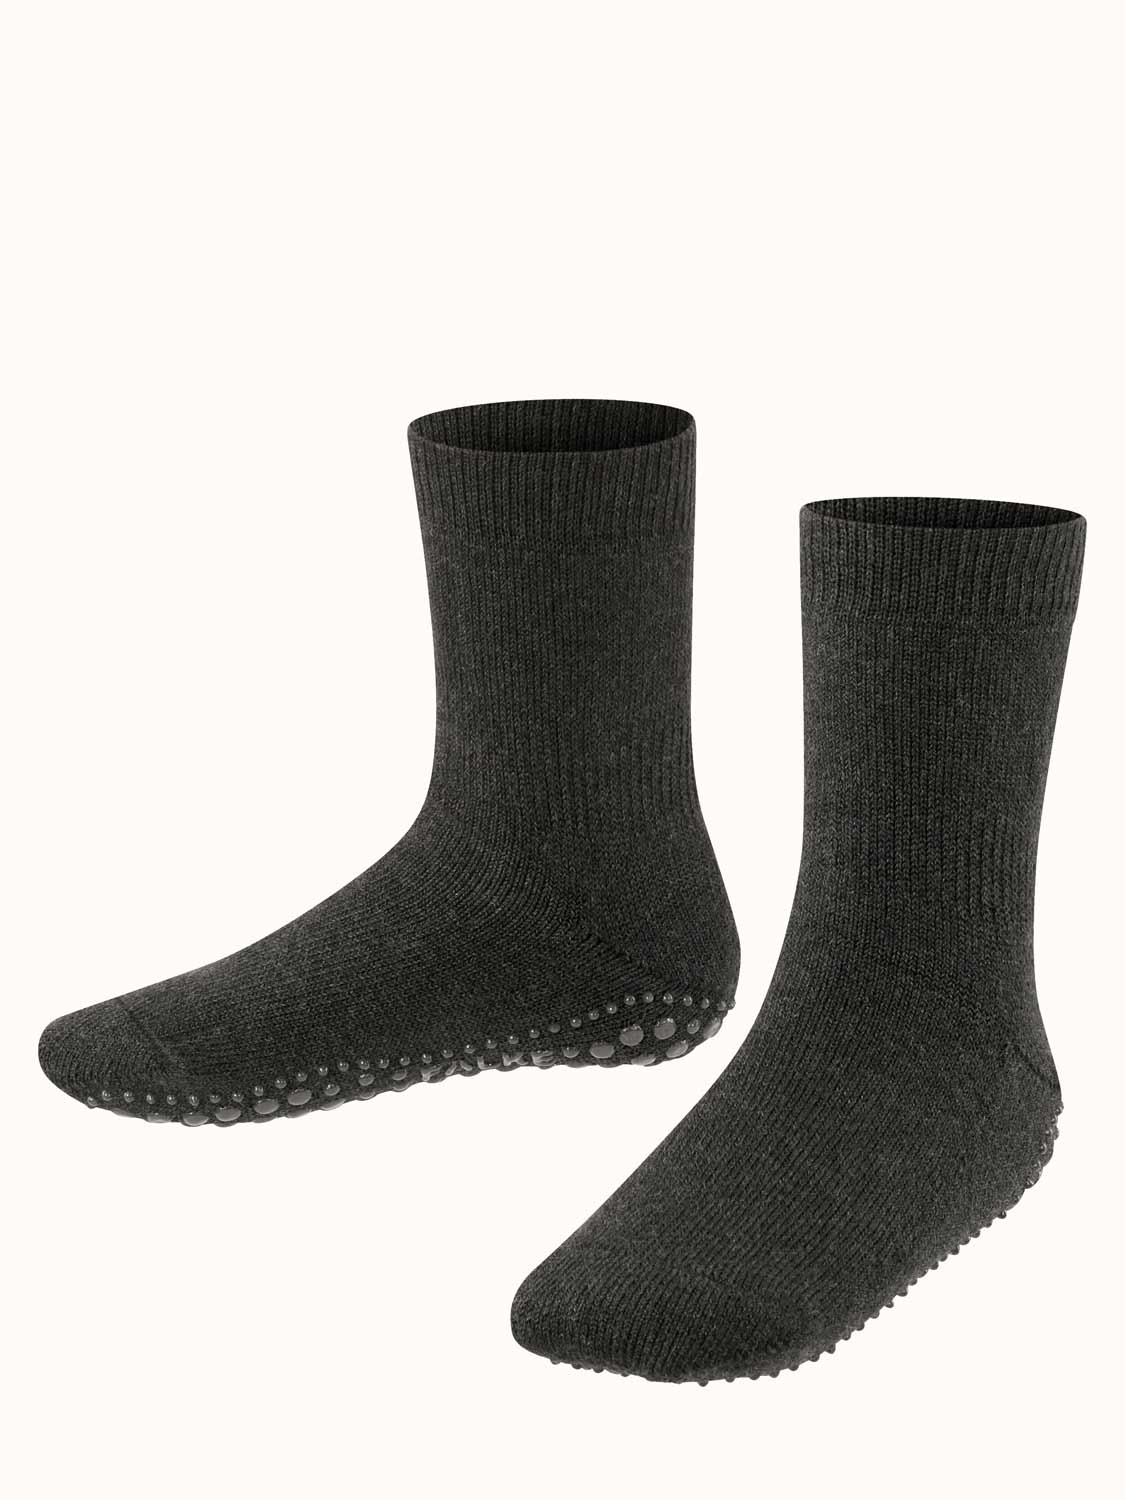 Catspads Kids Merino Slipper Socks